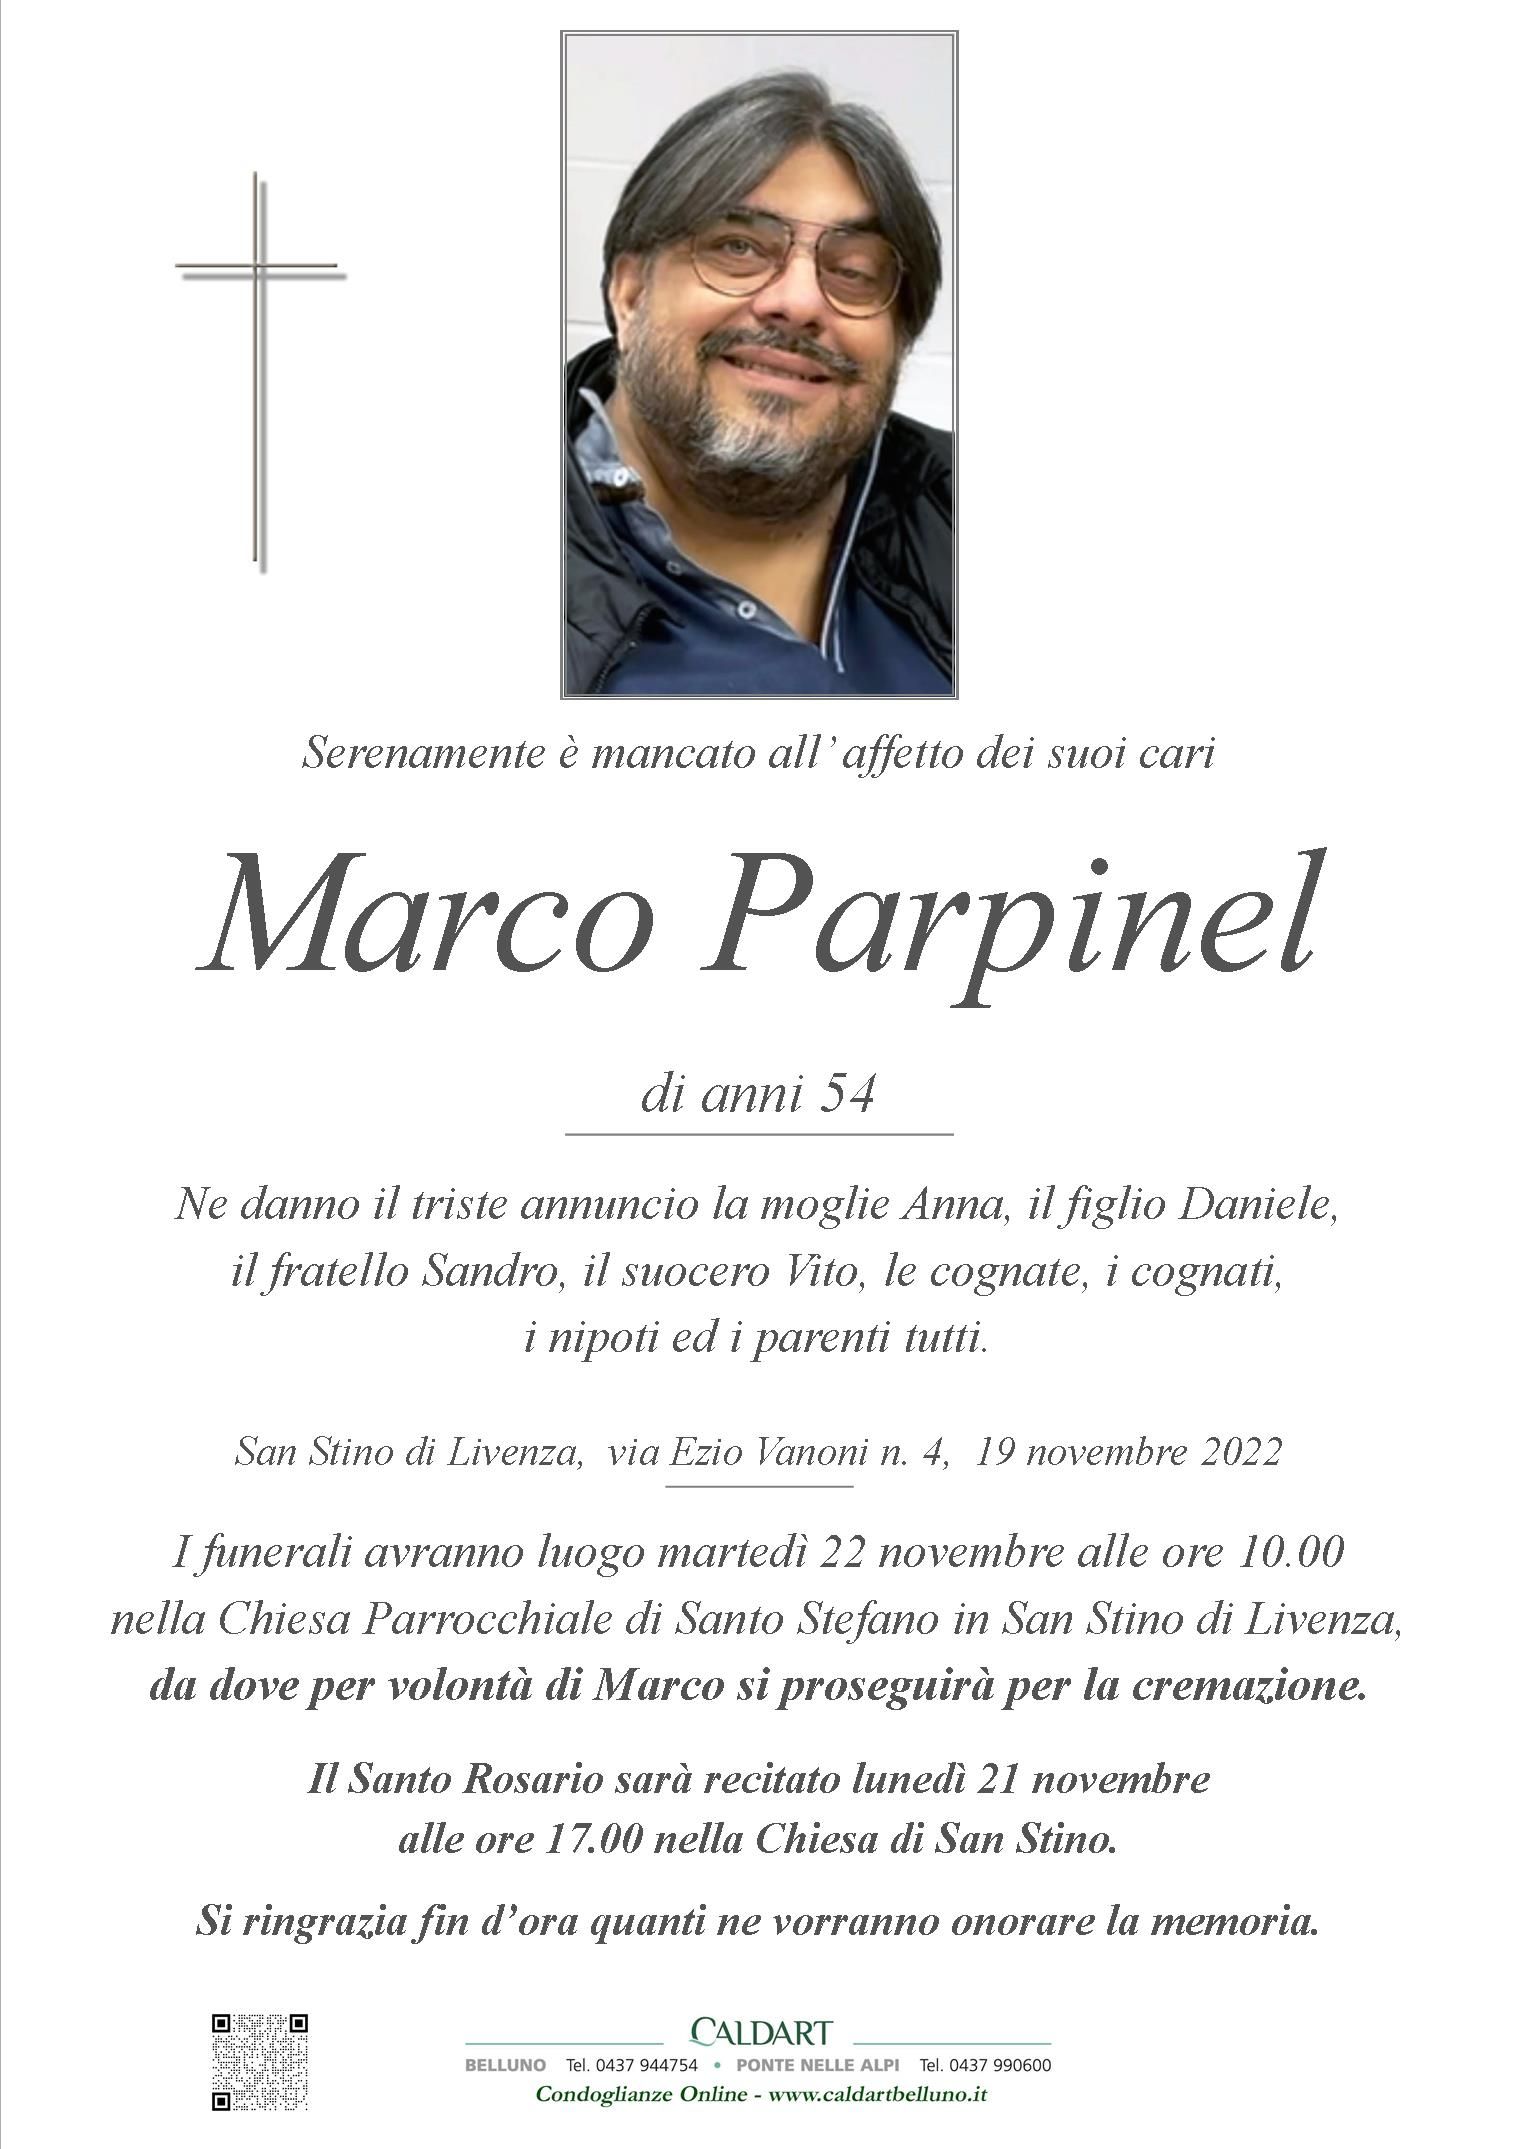 Parpinel Marco